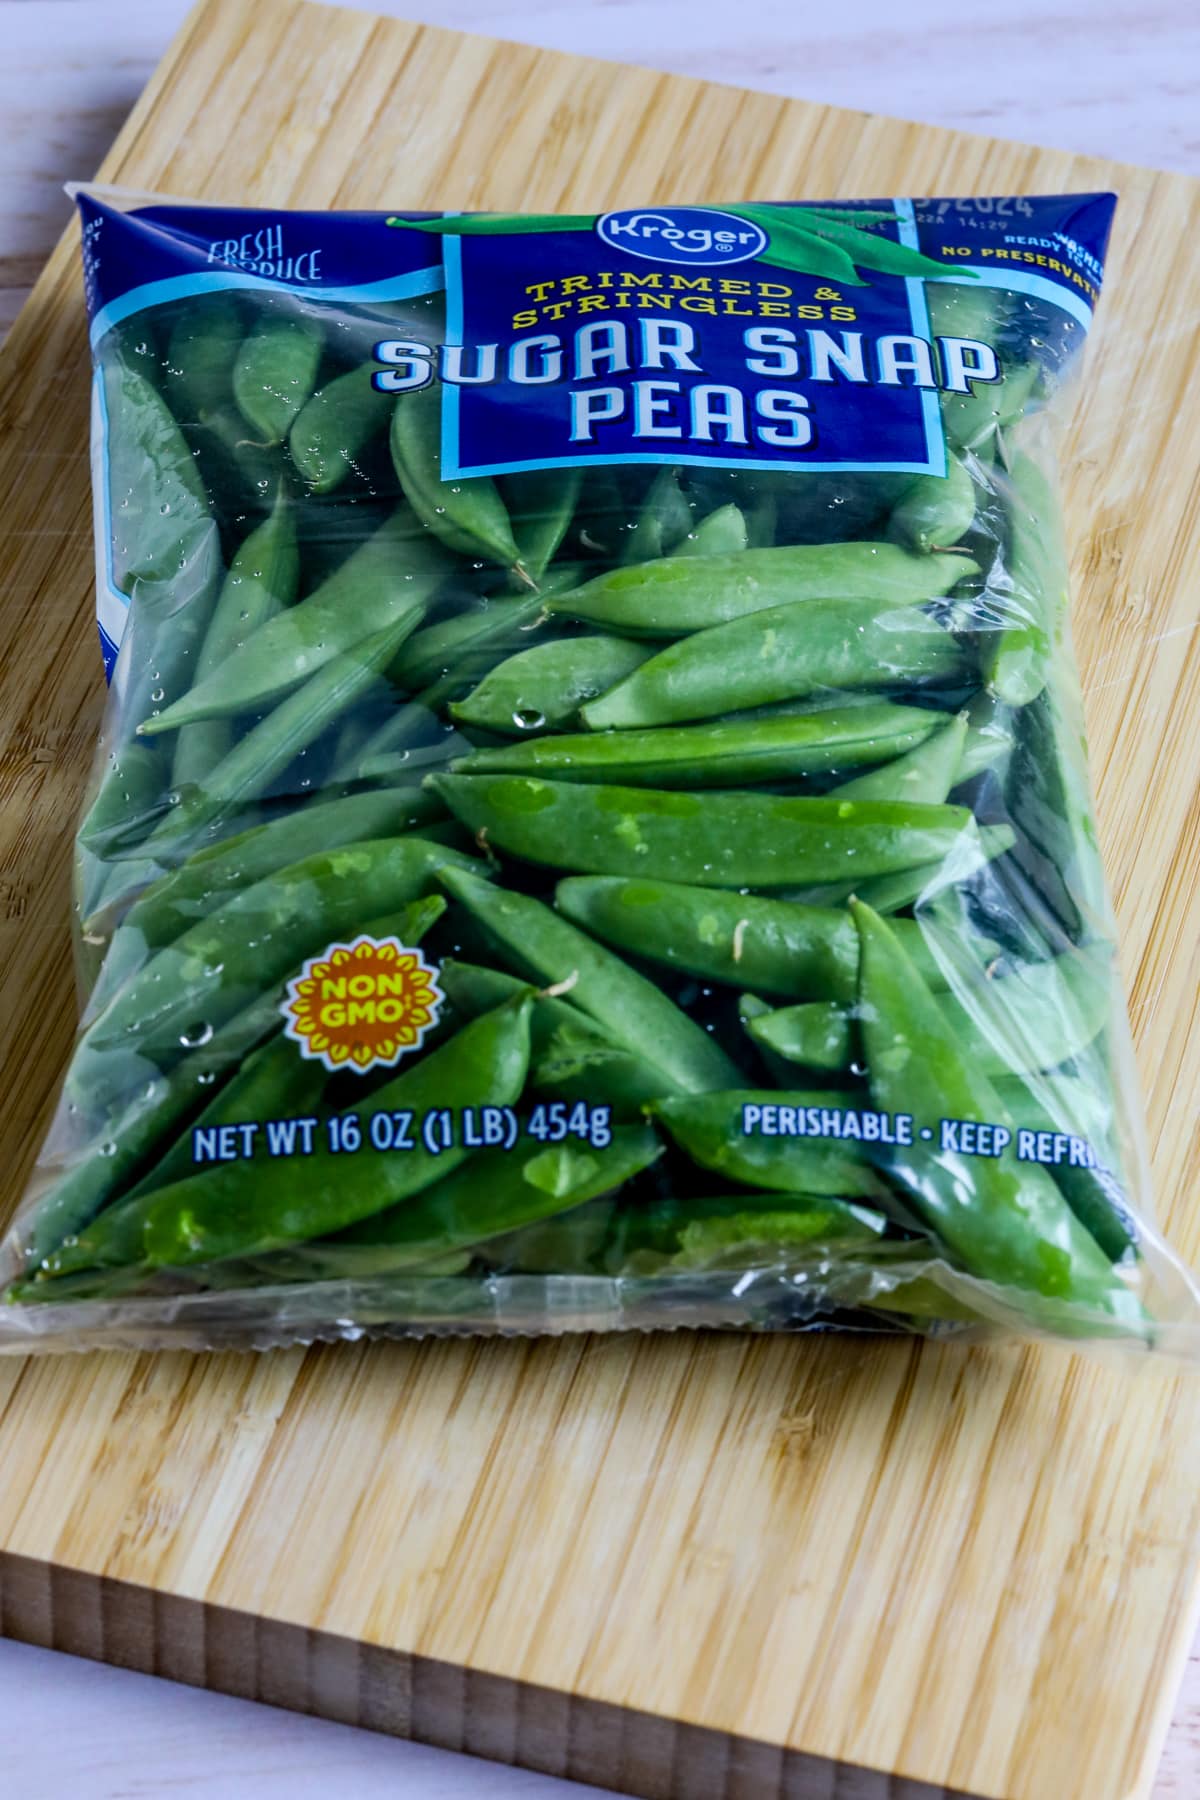 Sugar Snap Peas in bag, shown on cutting board.